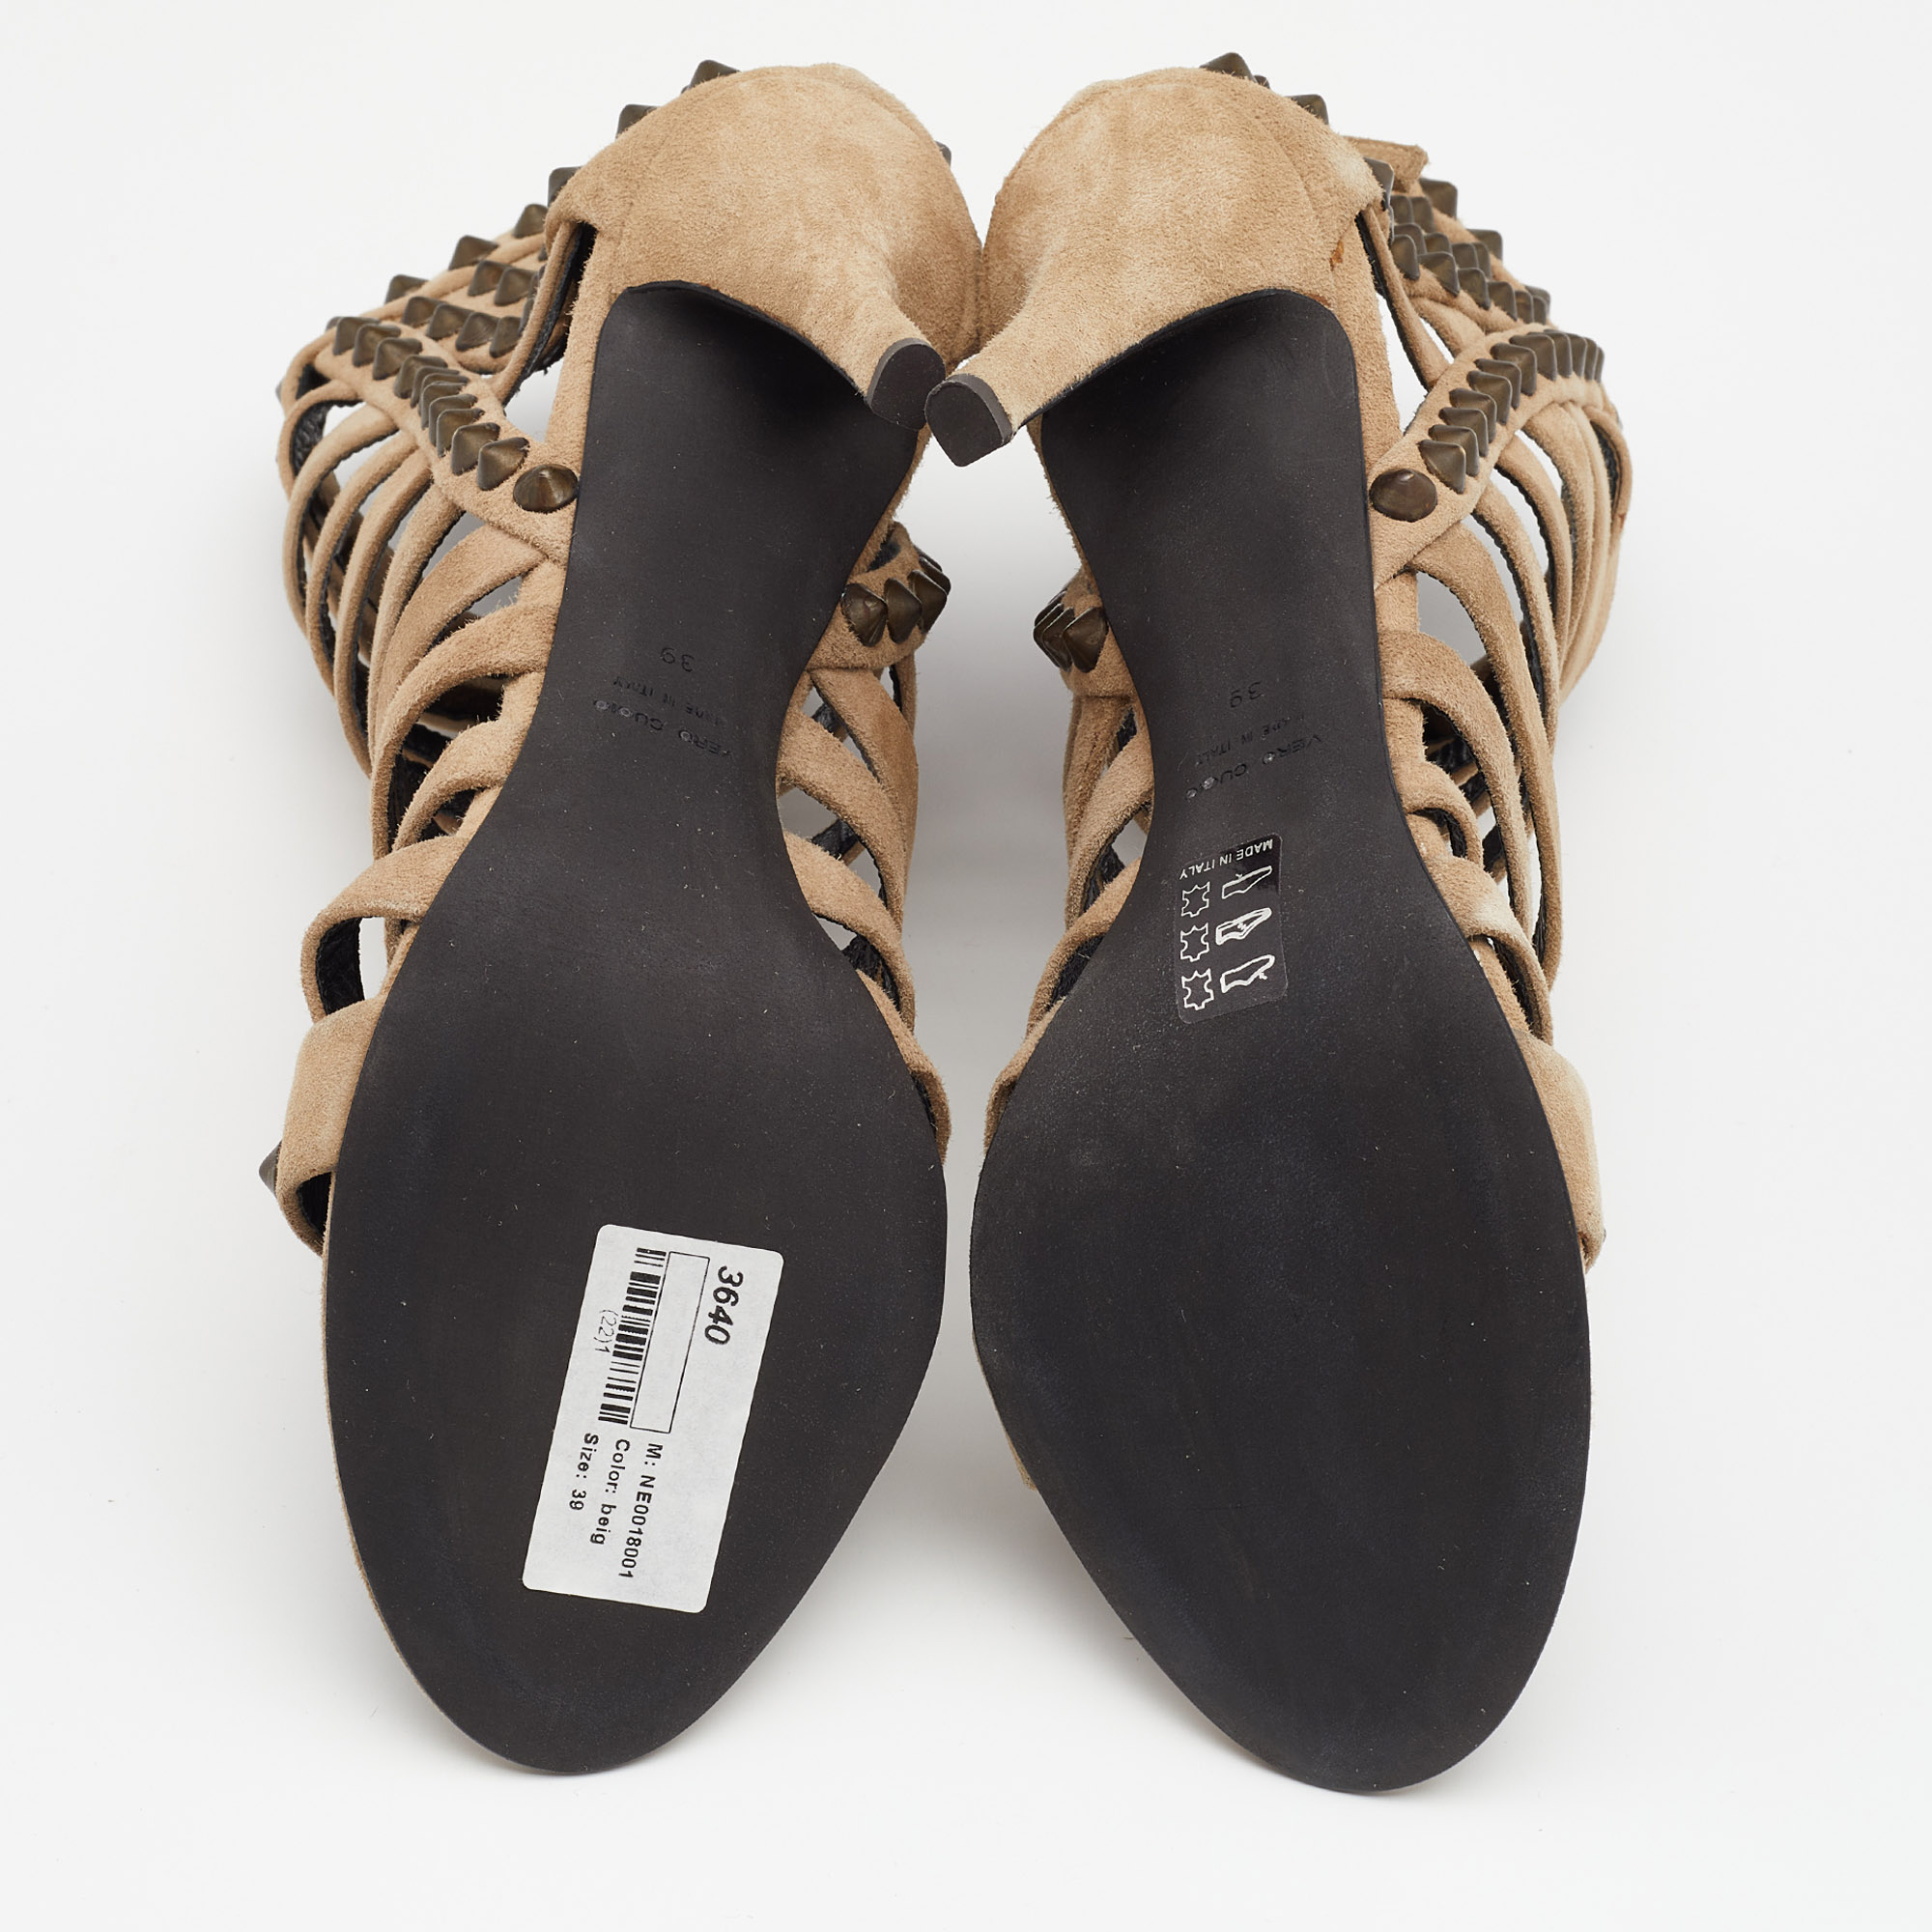 Giuseppe Zanotti For Pierre Balmain Beige Suede Studded Strappy Sandals Size 39